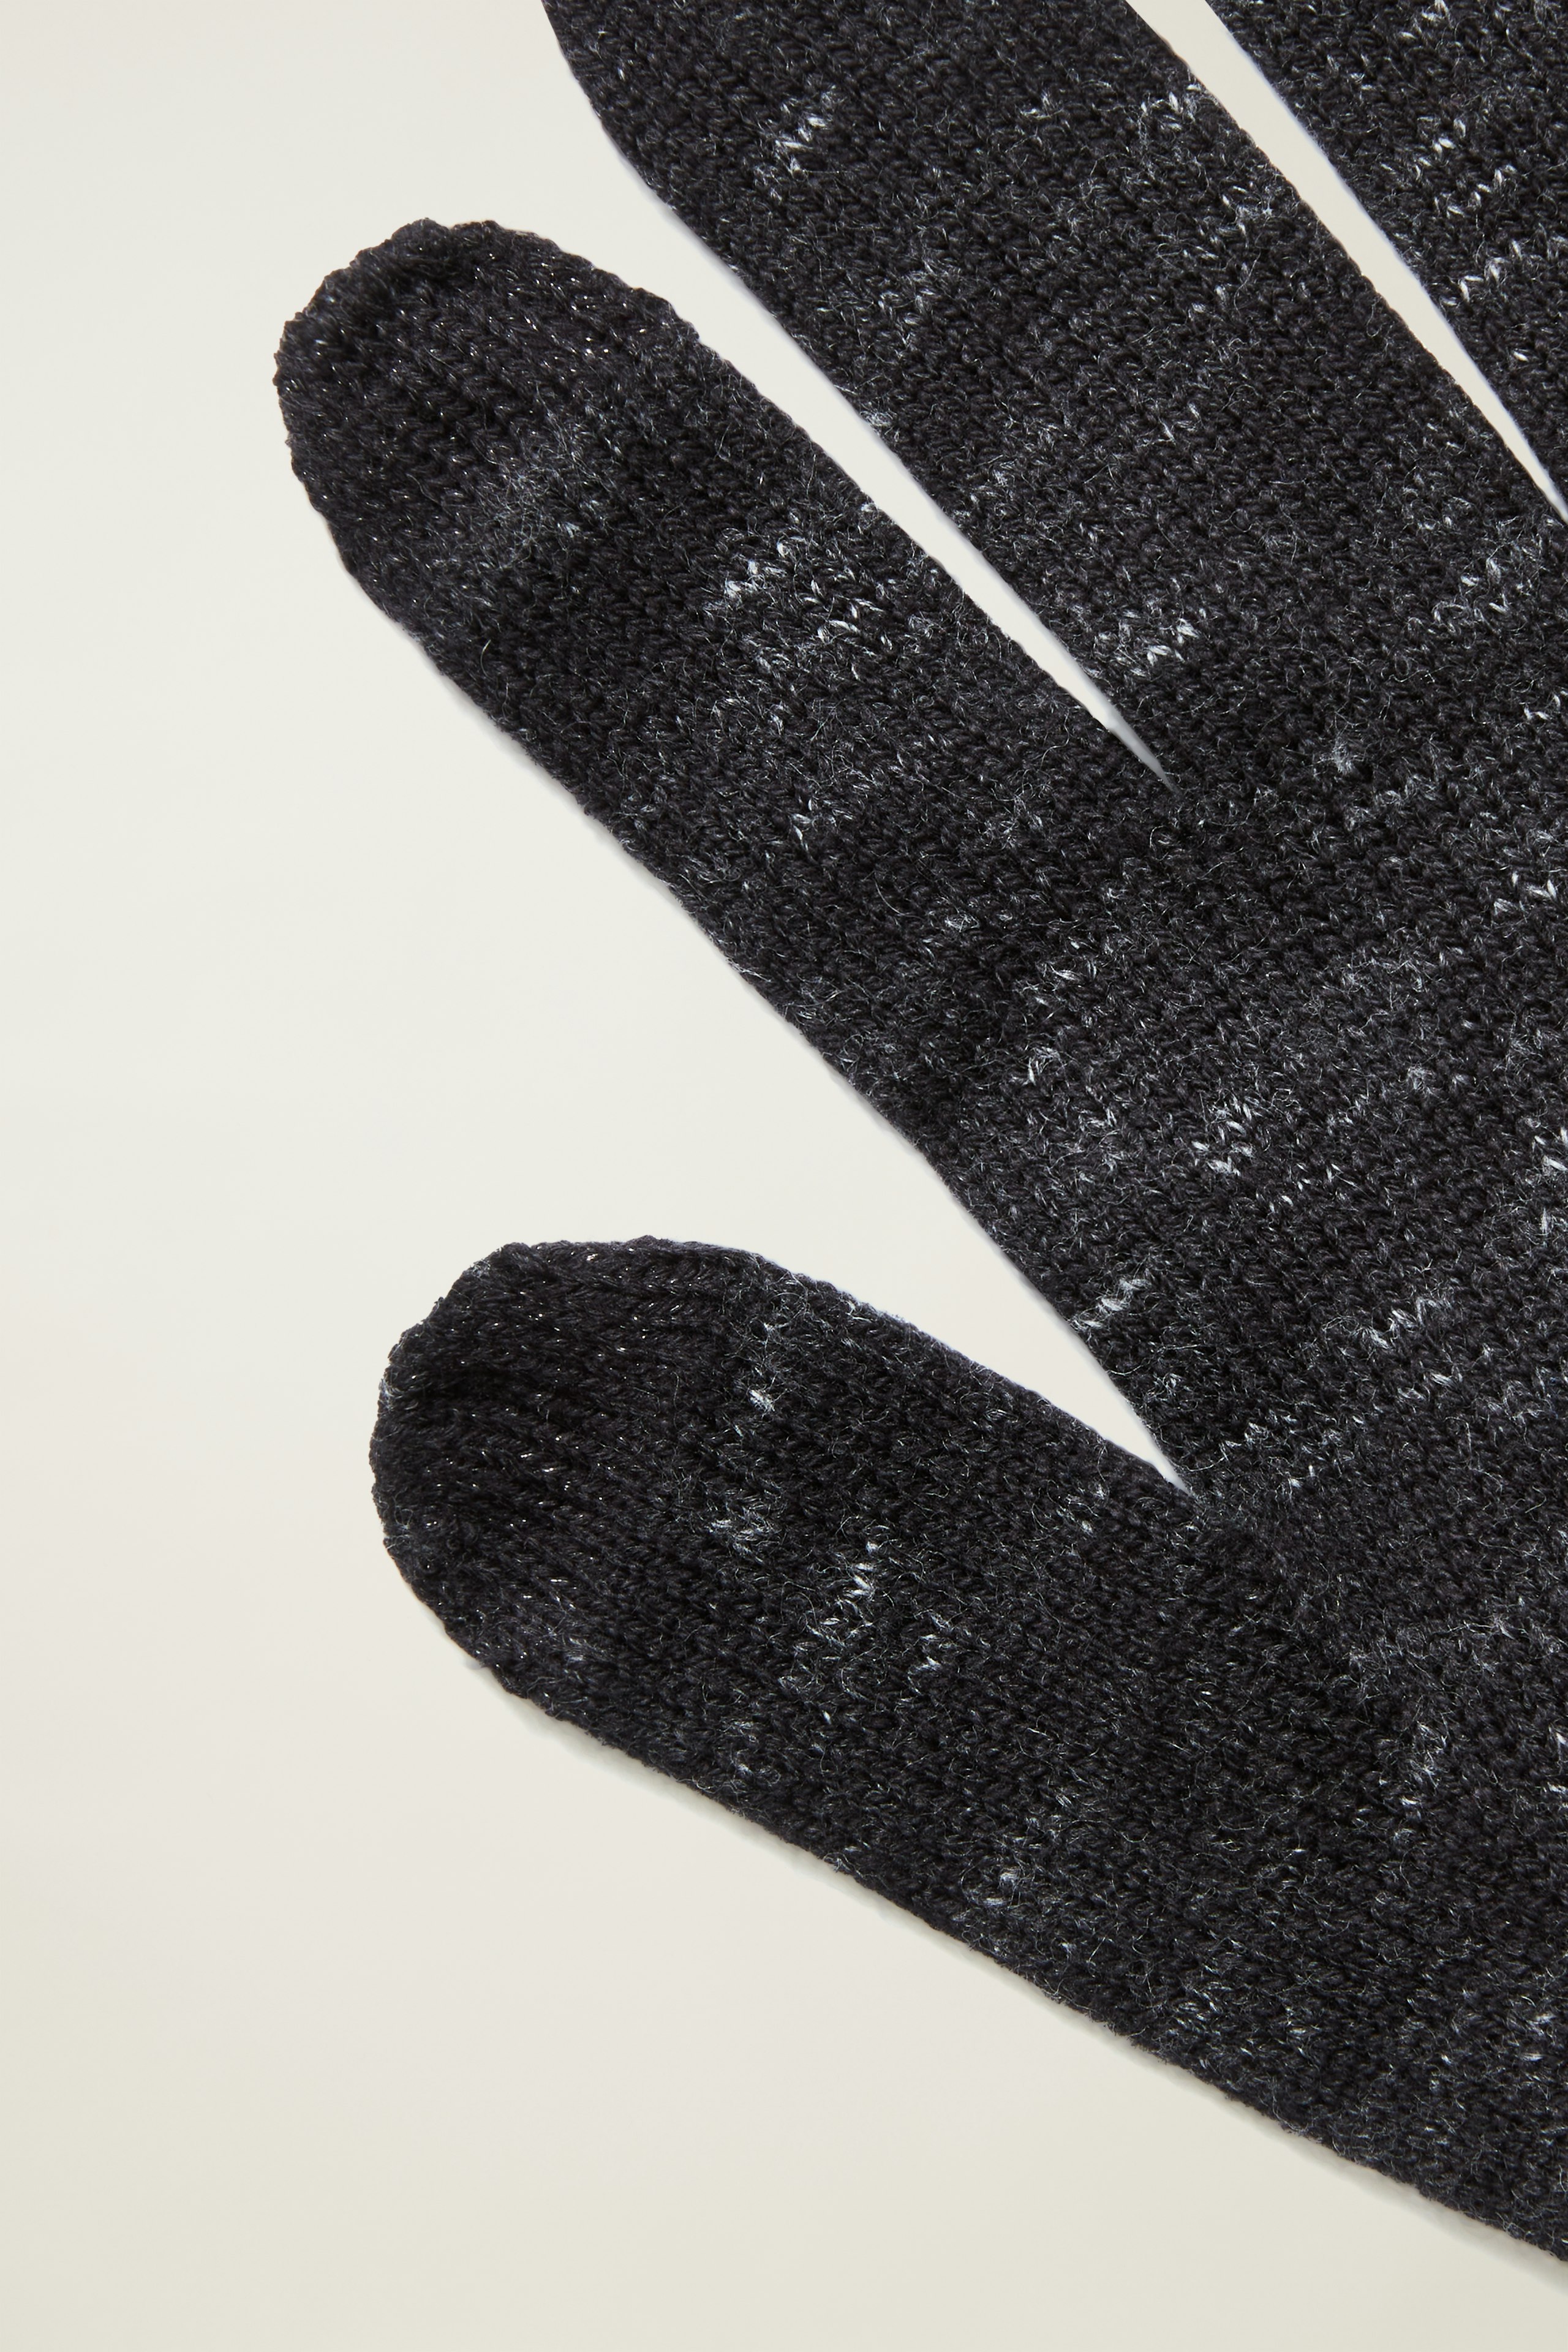 Cotton Cashmere Gloves